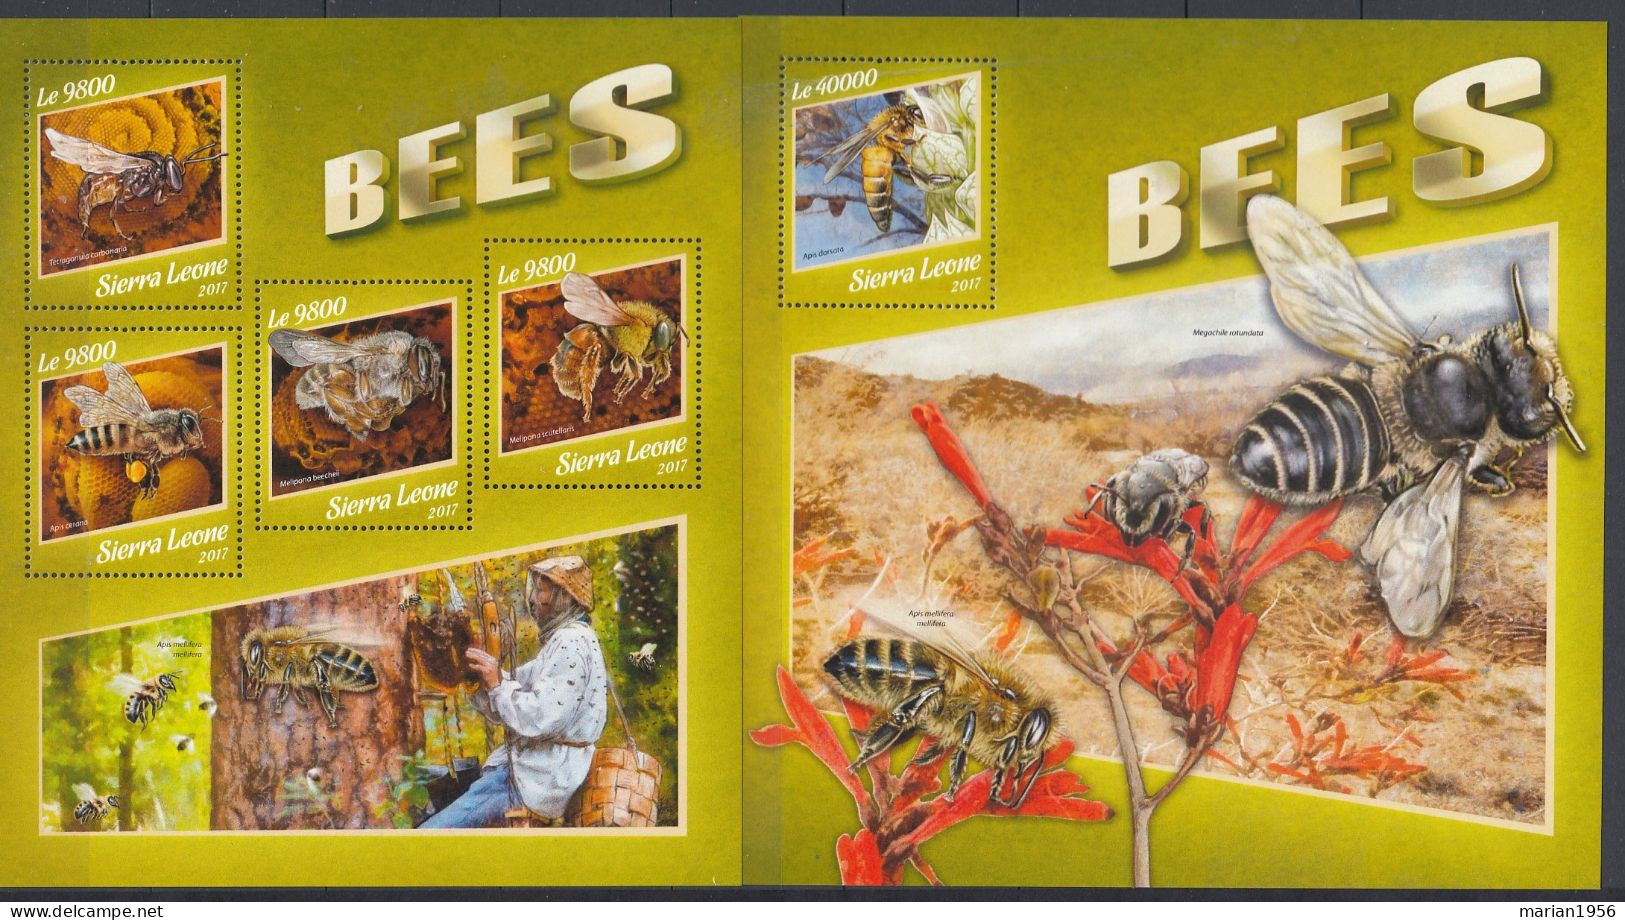 Sierra Leone 2017 - ABEILLES - BL + BF XL  - MNH - Yvert 39 Eur. - Honeybees